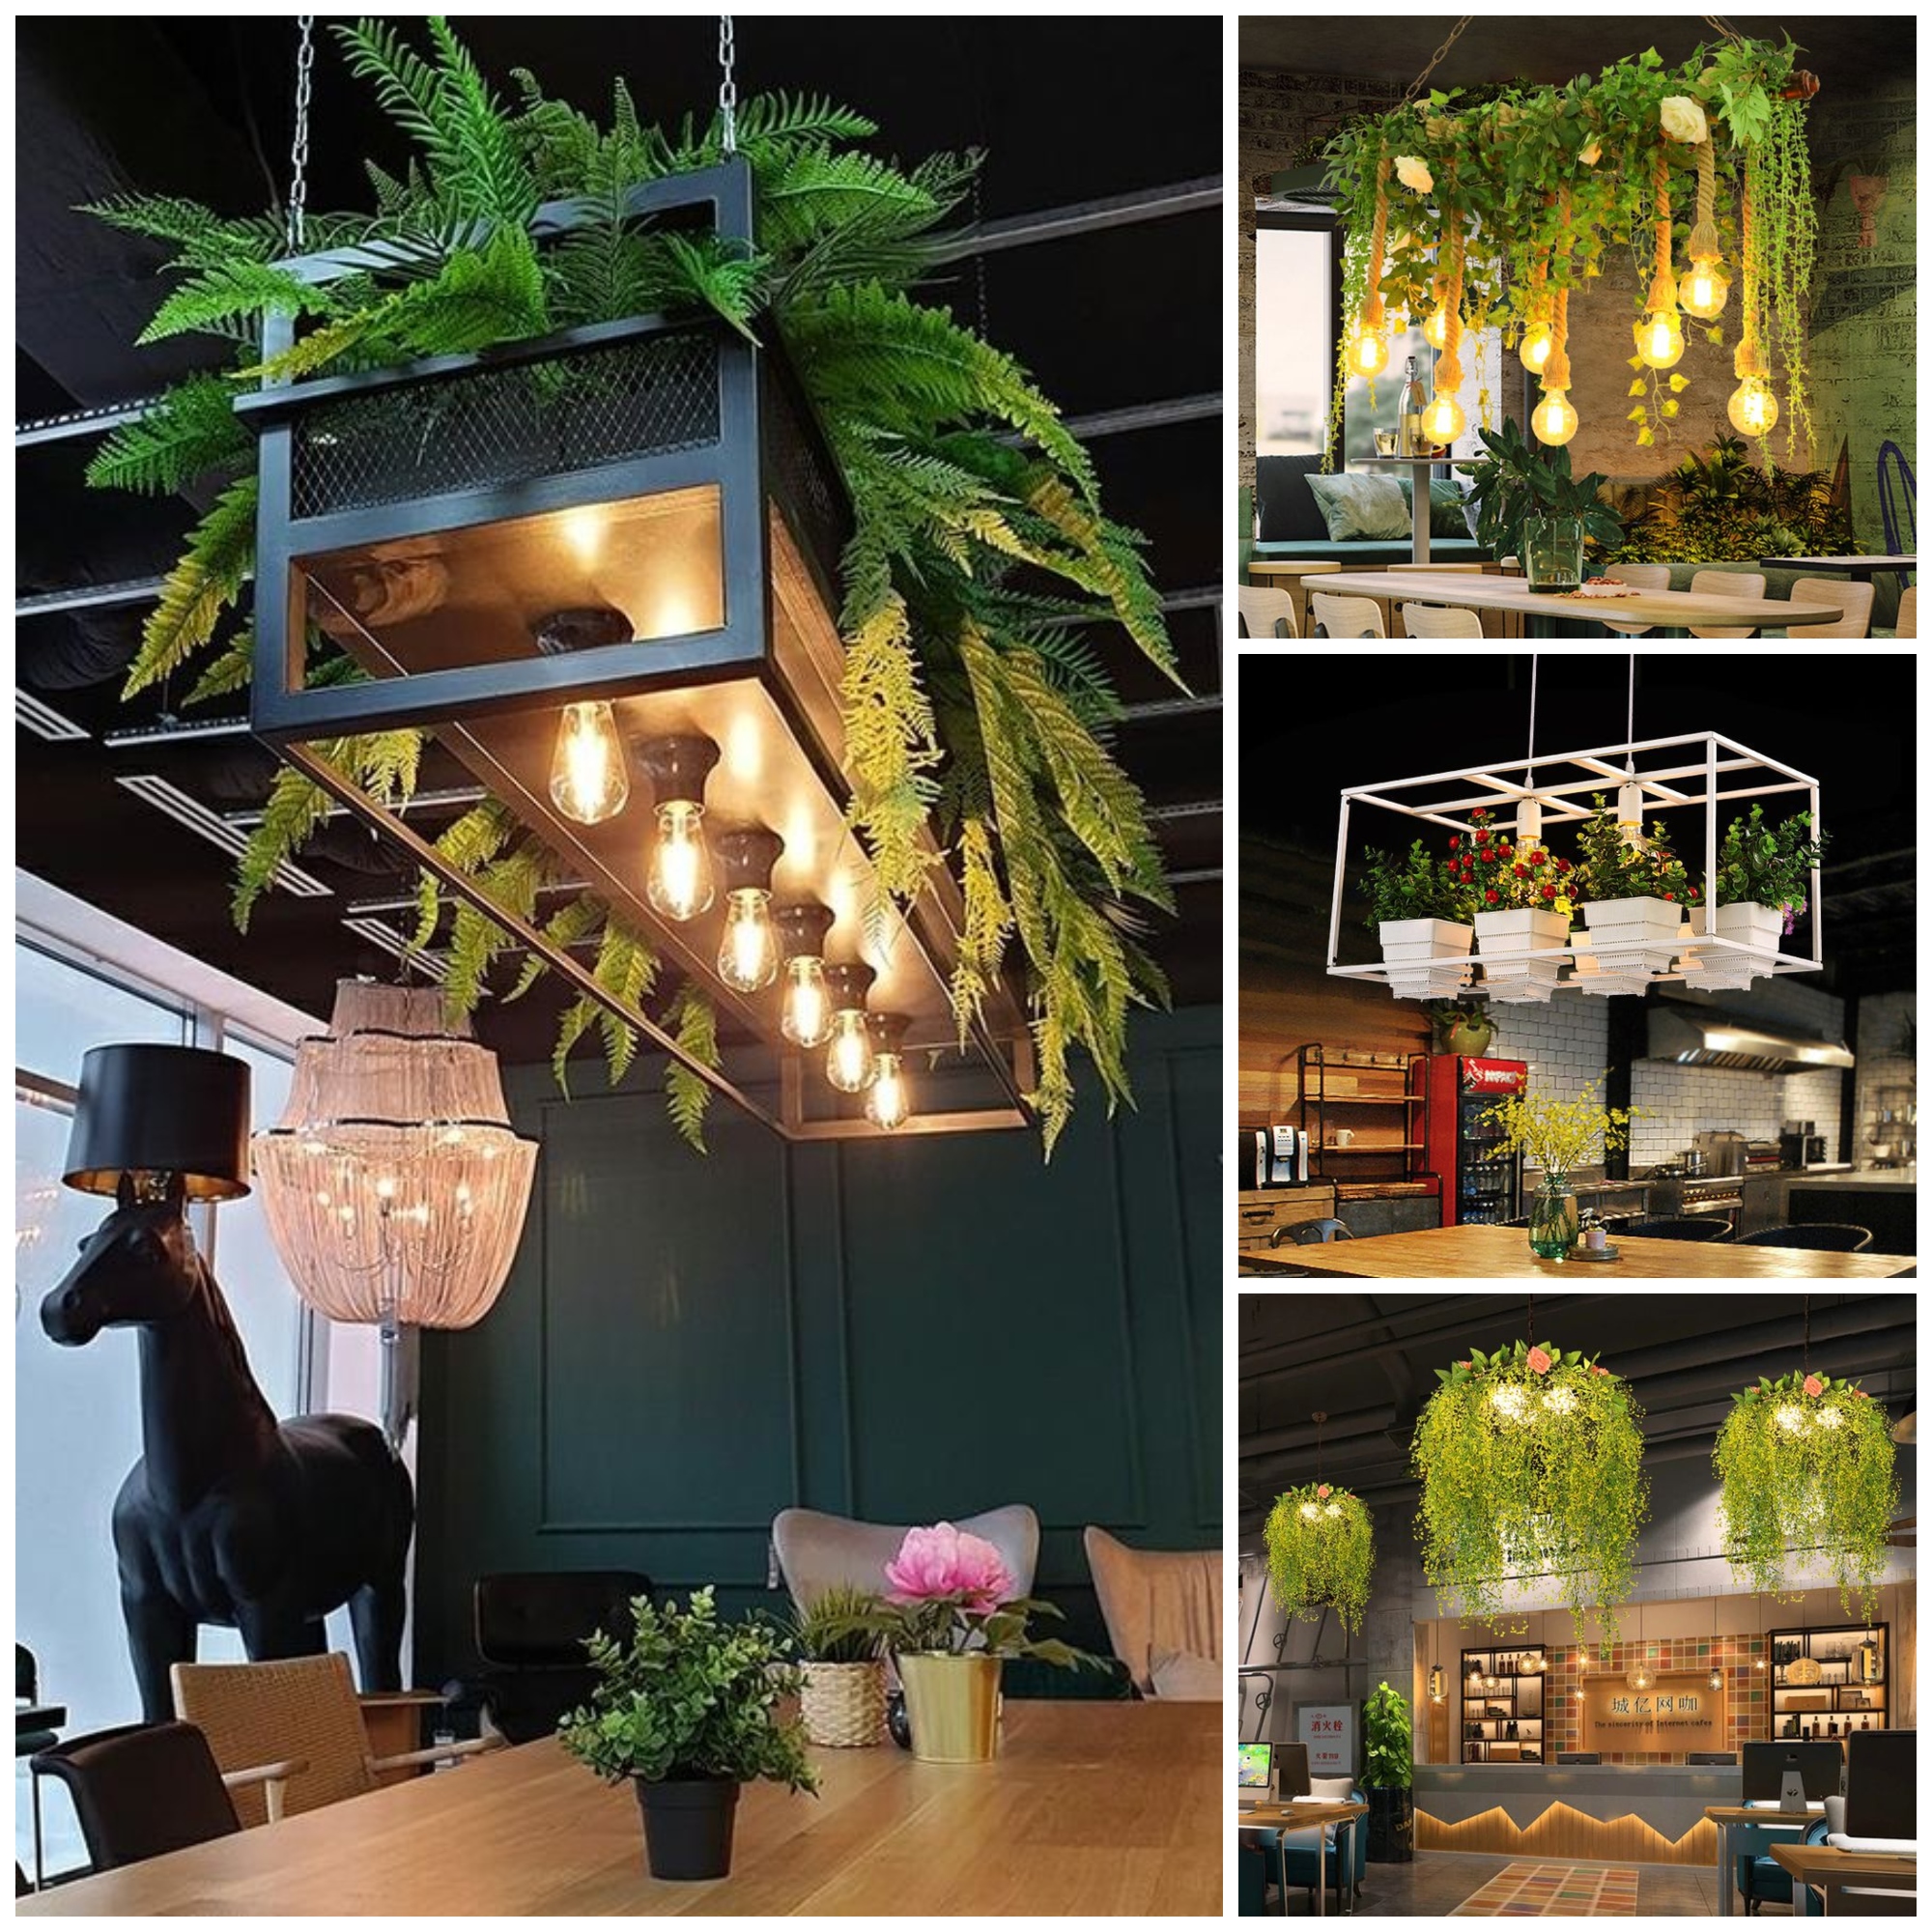 Home trends: hanging plants & lights